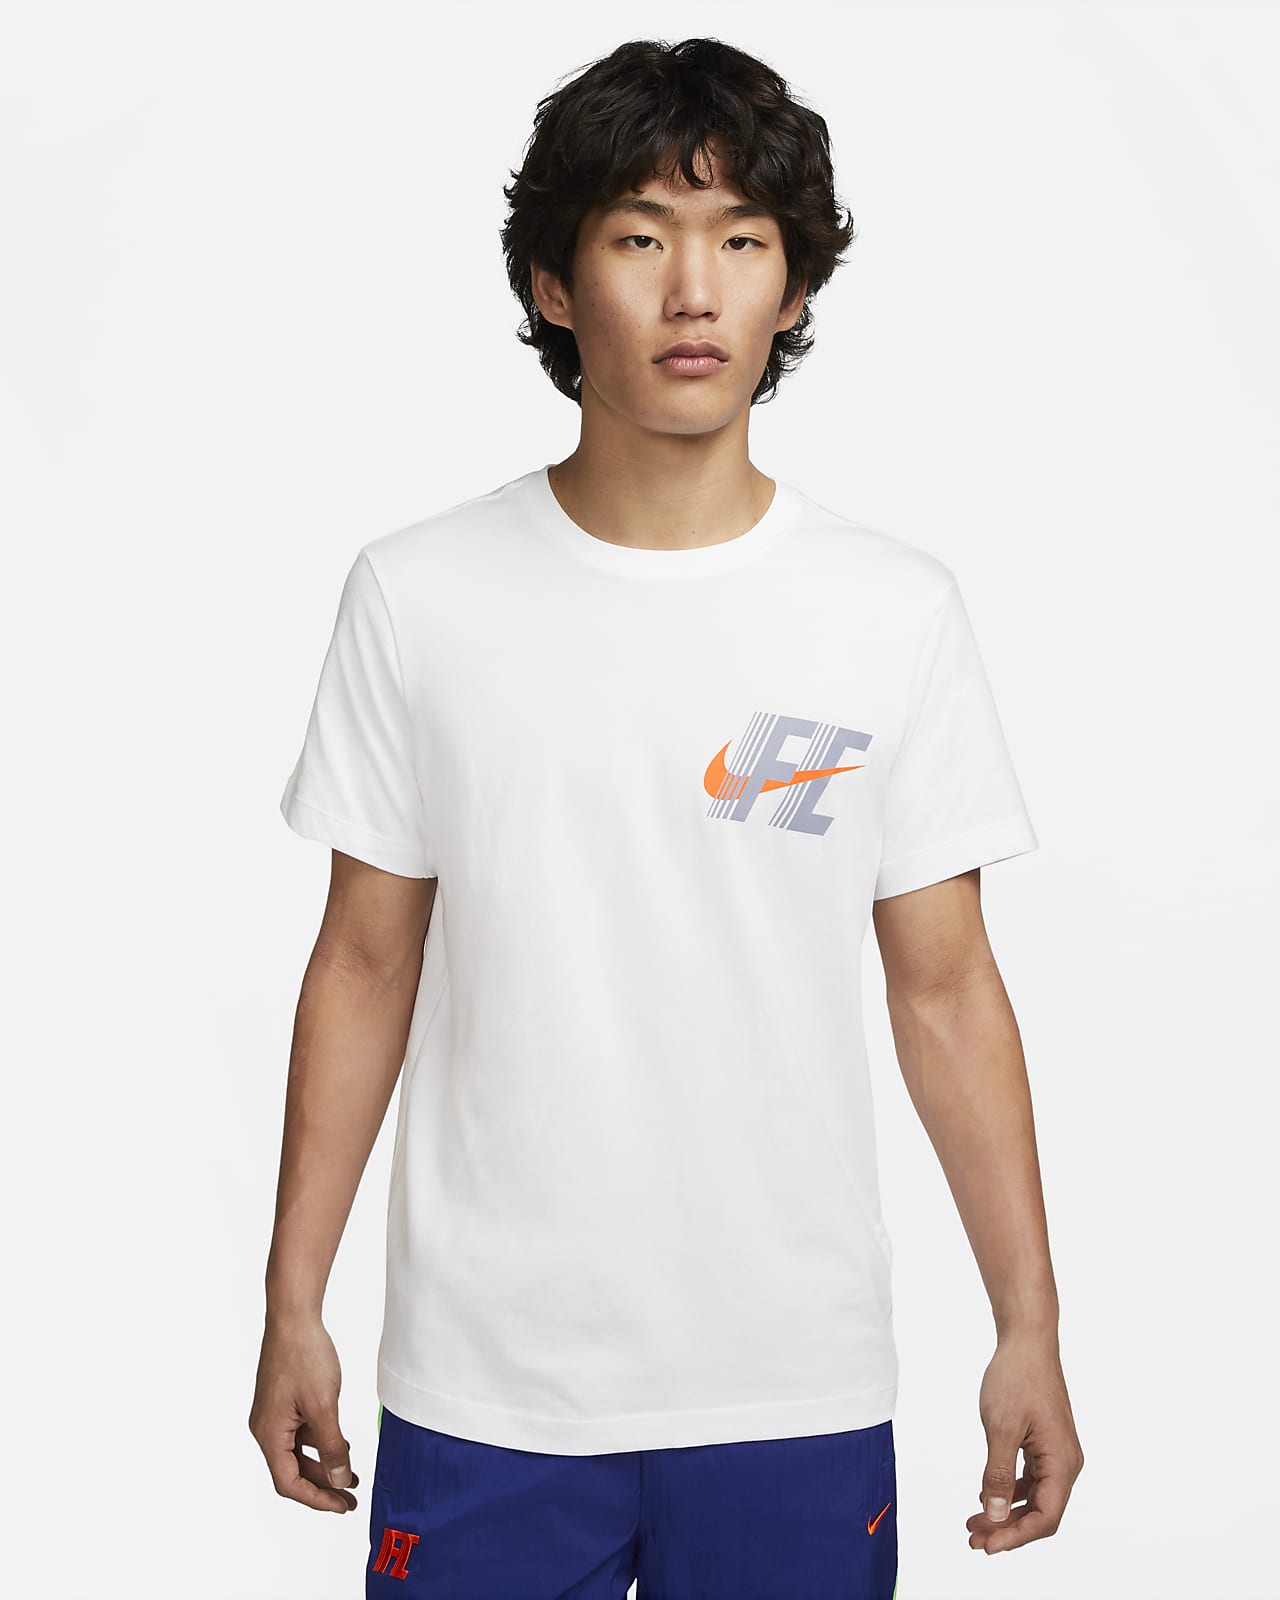 breed Neuken begroting Nike F.C. Men's Nike Dri-FIT Football T-Shirt. Nike ID